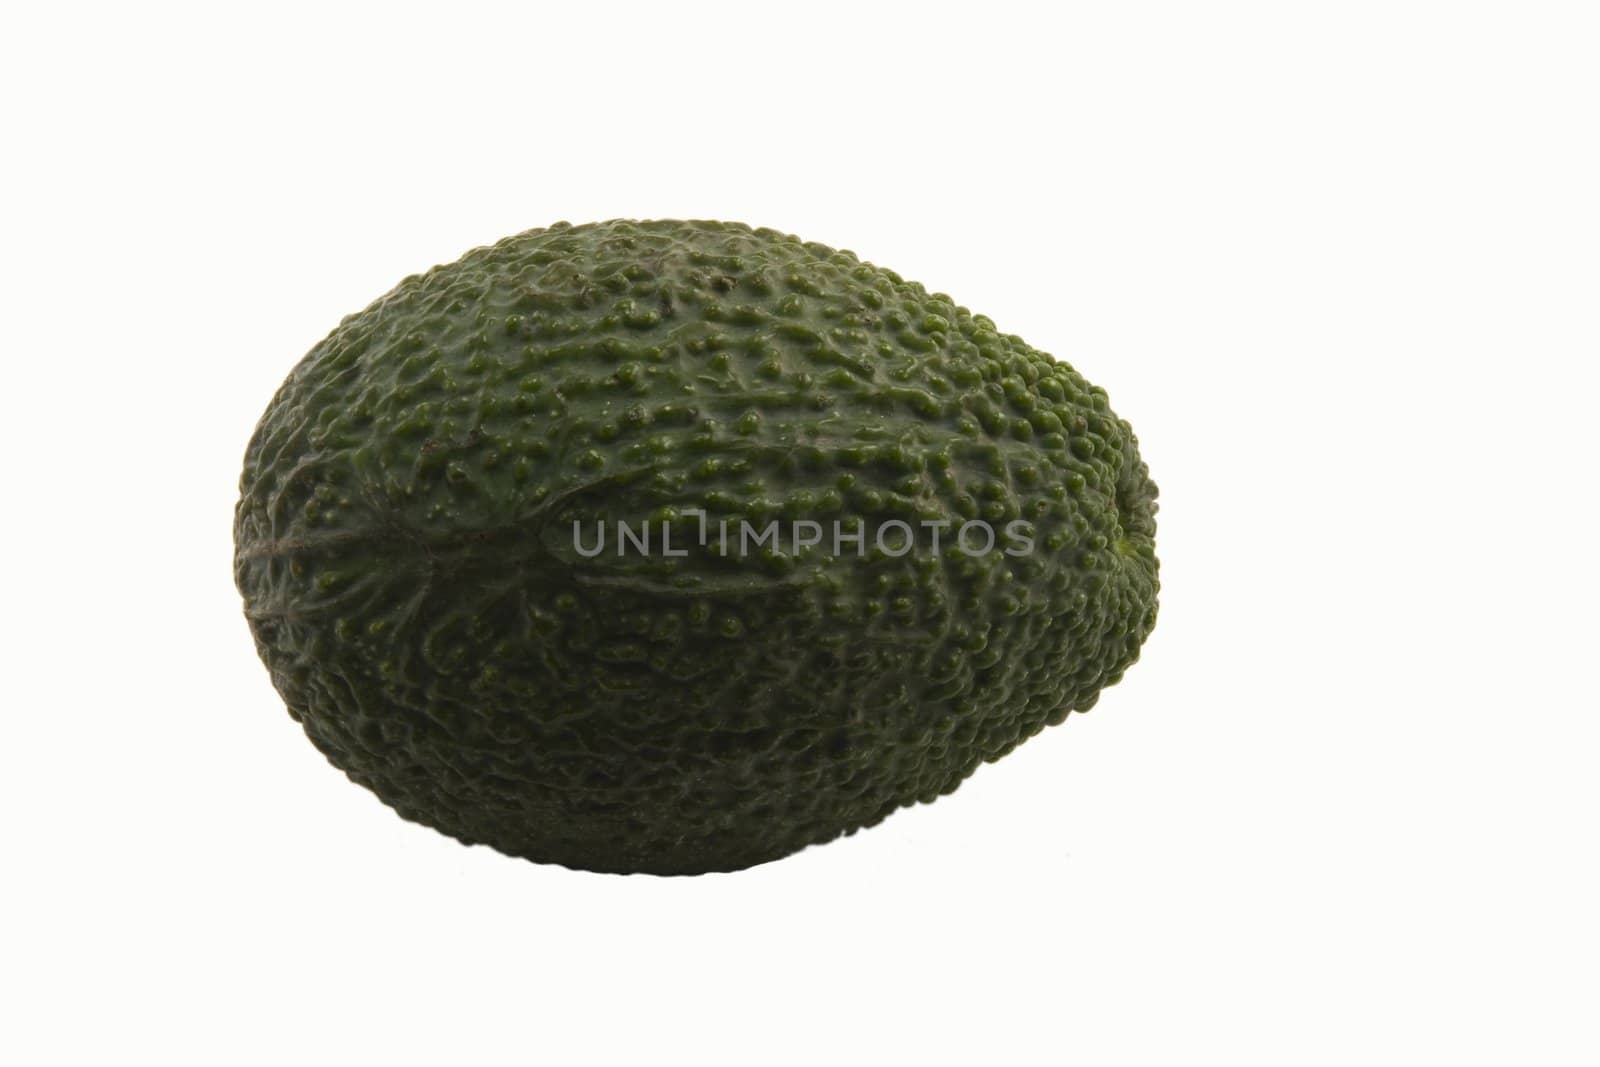 Avocado on white background. Close-up.Isolated object